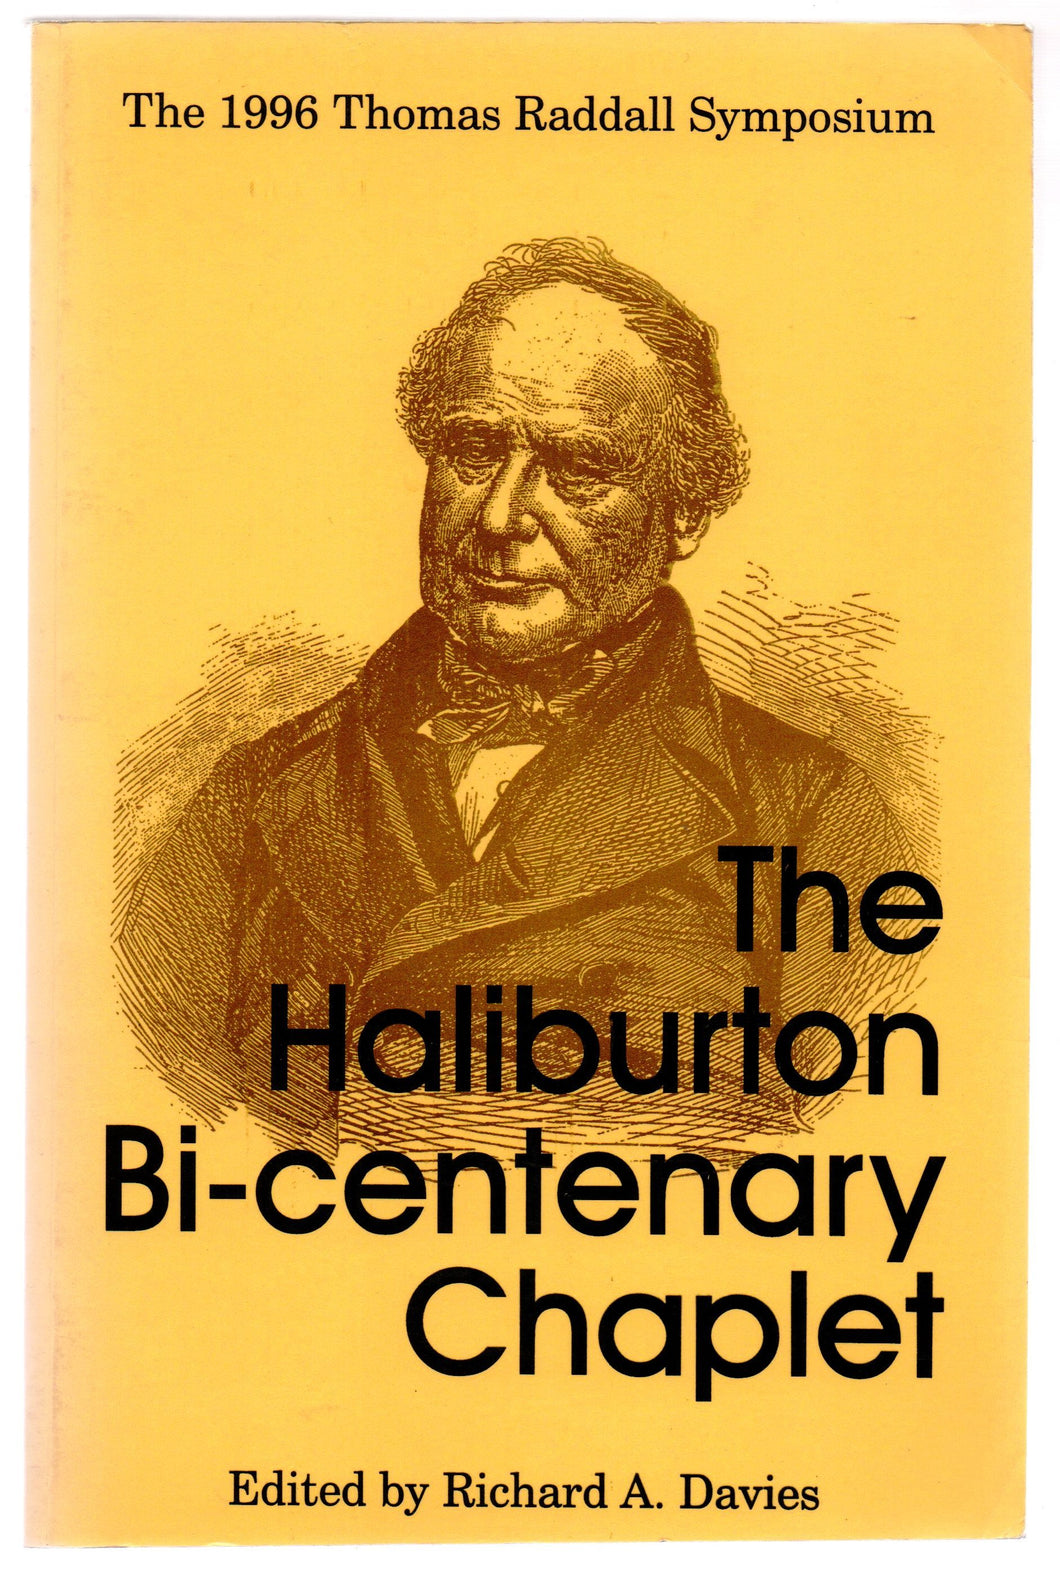 The Haliburton Bi-centenary Chaplet: Papers presented at the 1996 Thomas Raddall Symposium